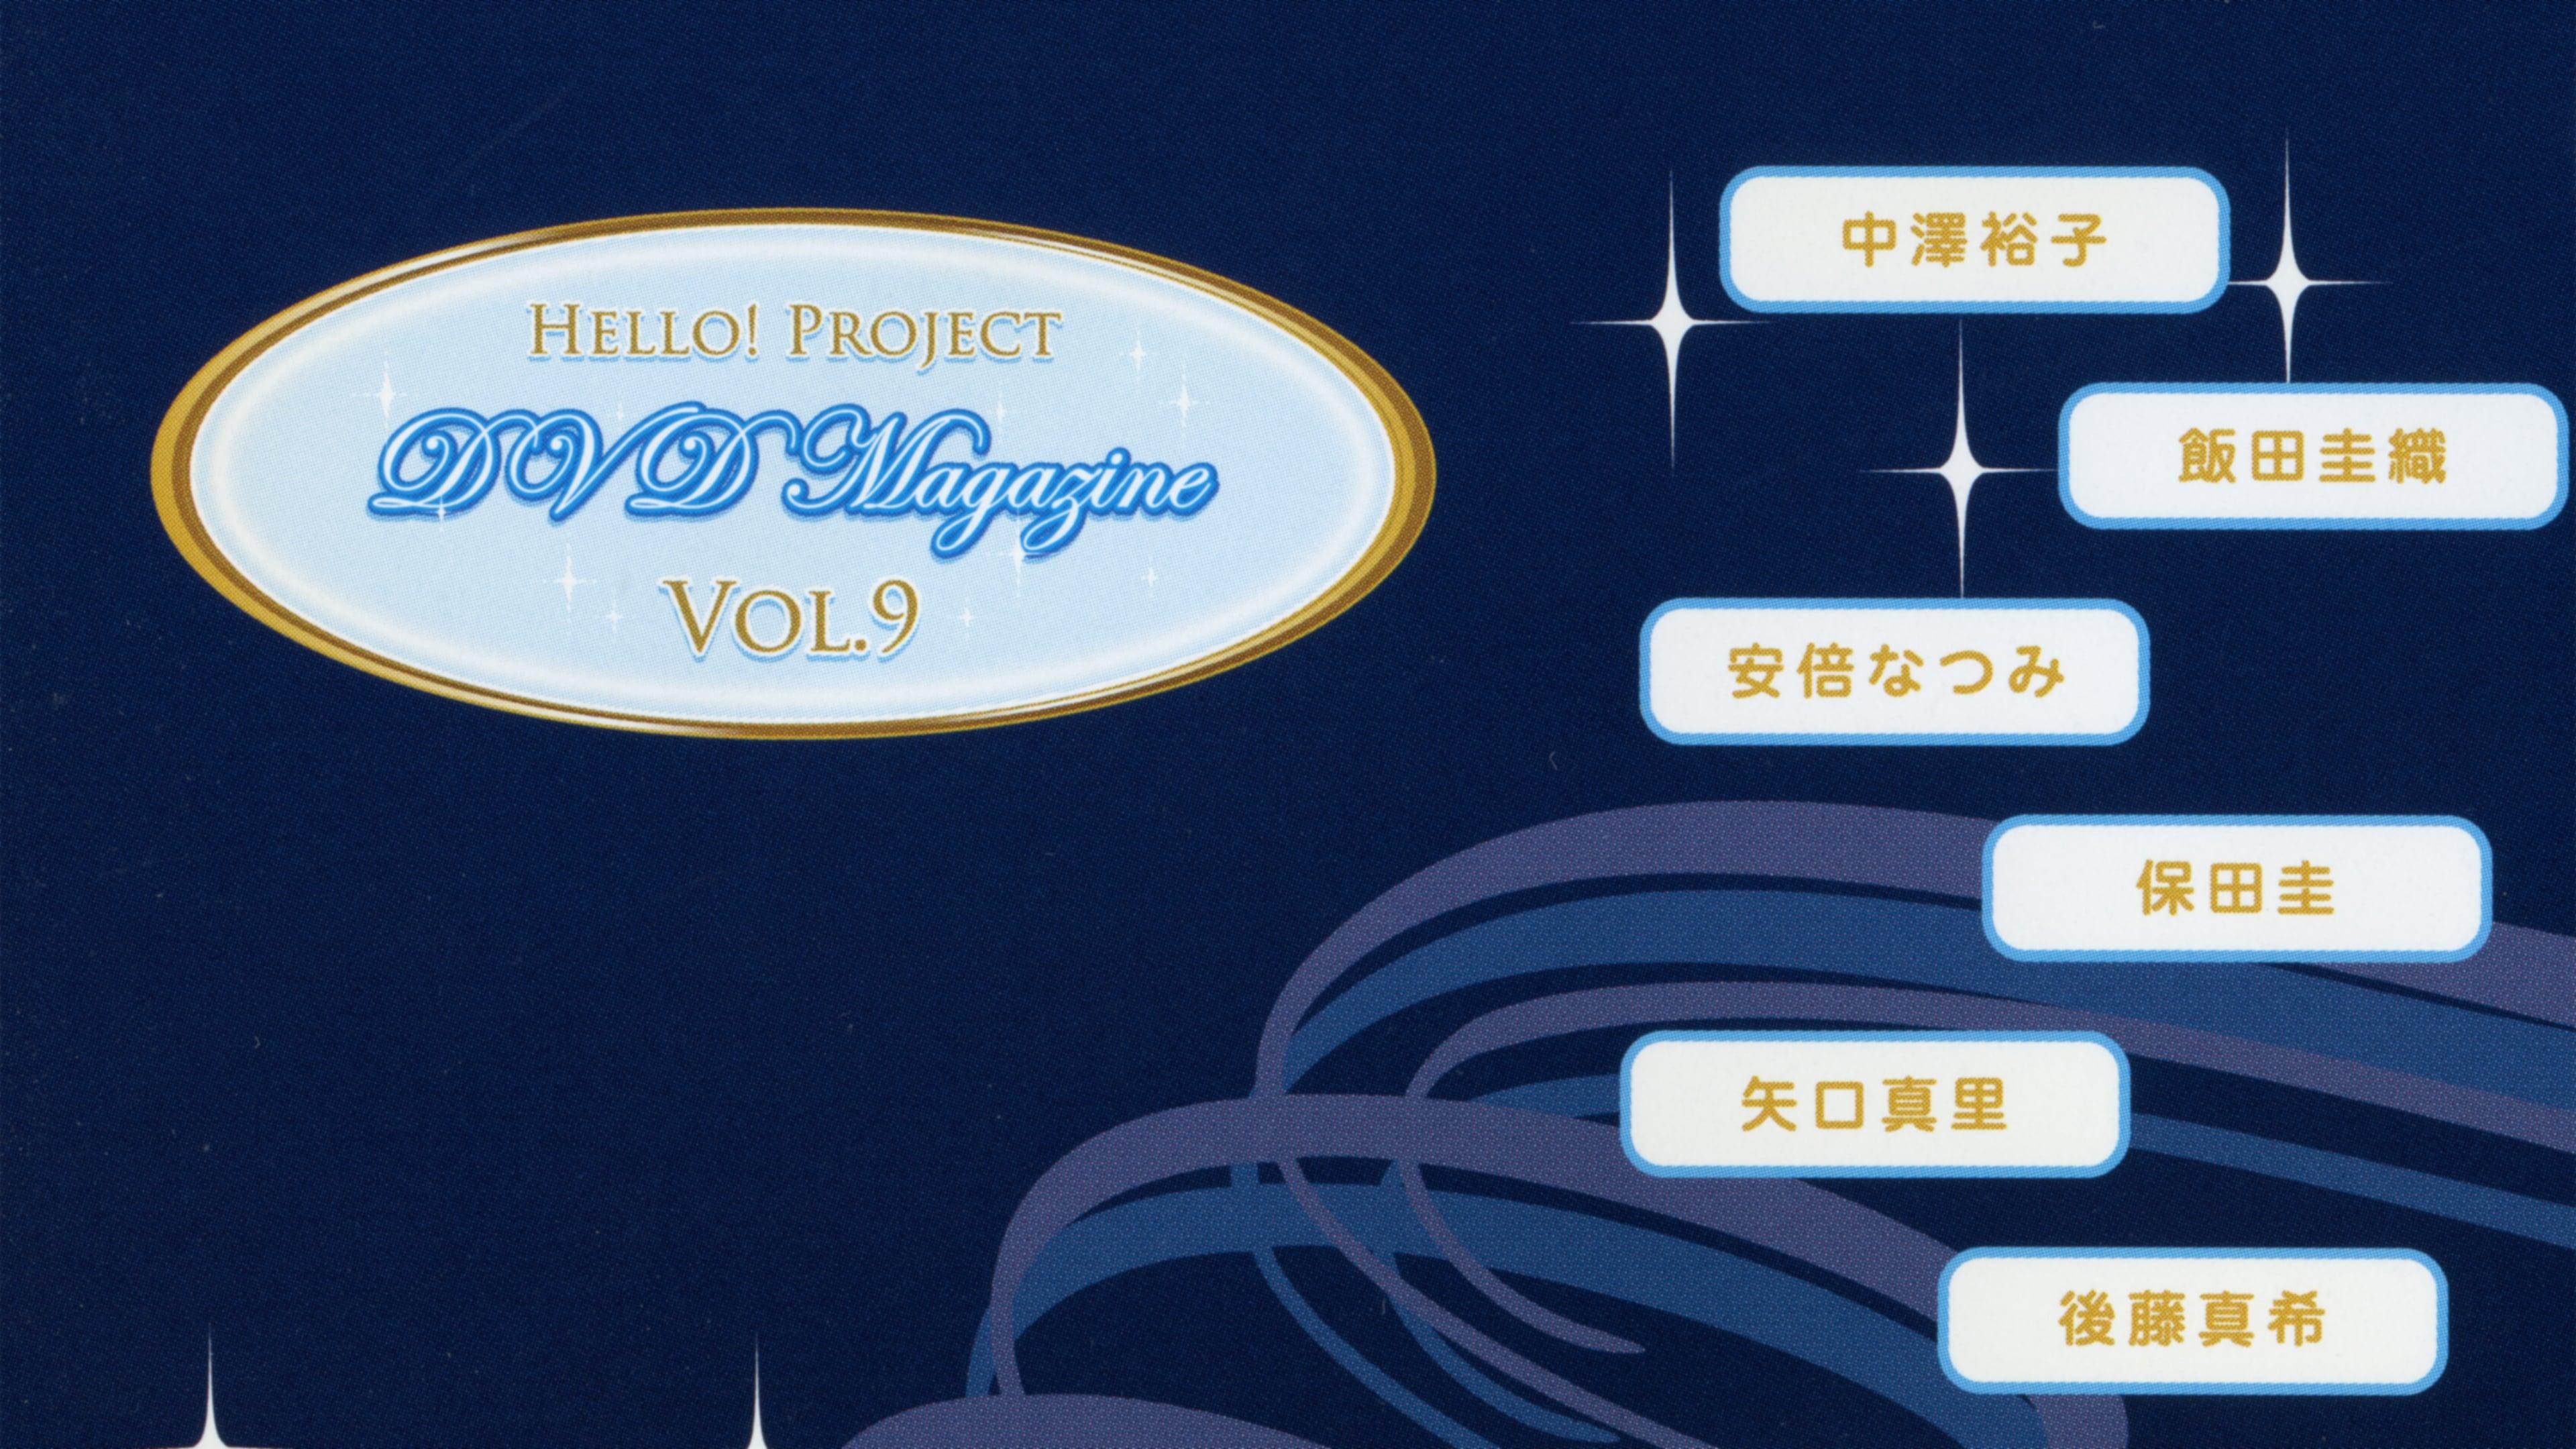 Hello! Project DVD Magazine Vol.9 backdrop